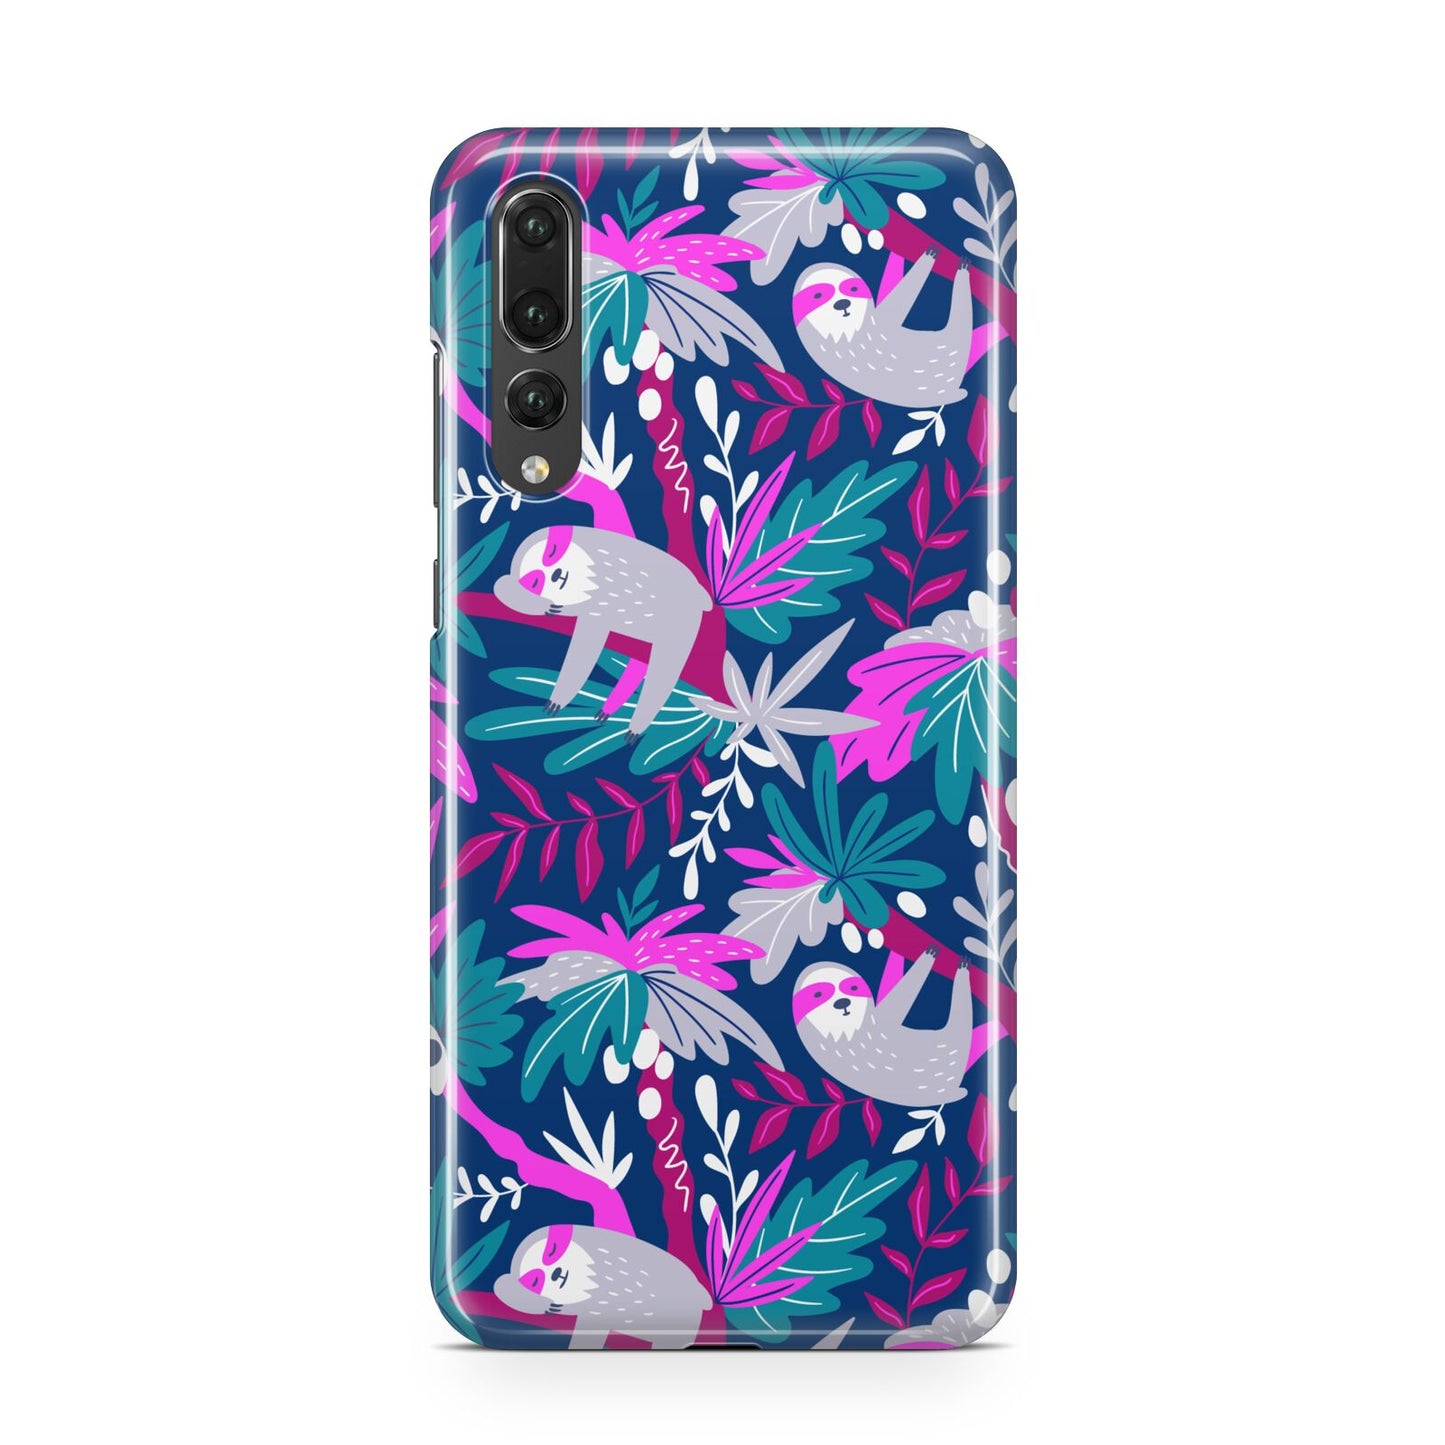 Sloth Huawei P20 Pro Phone Case